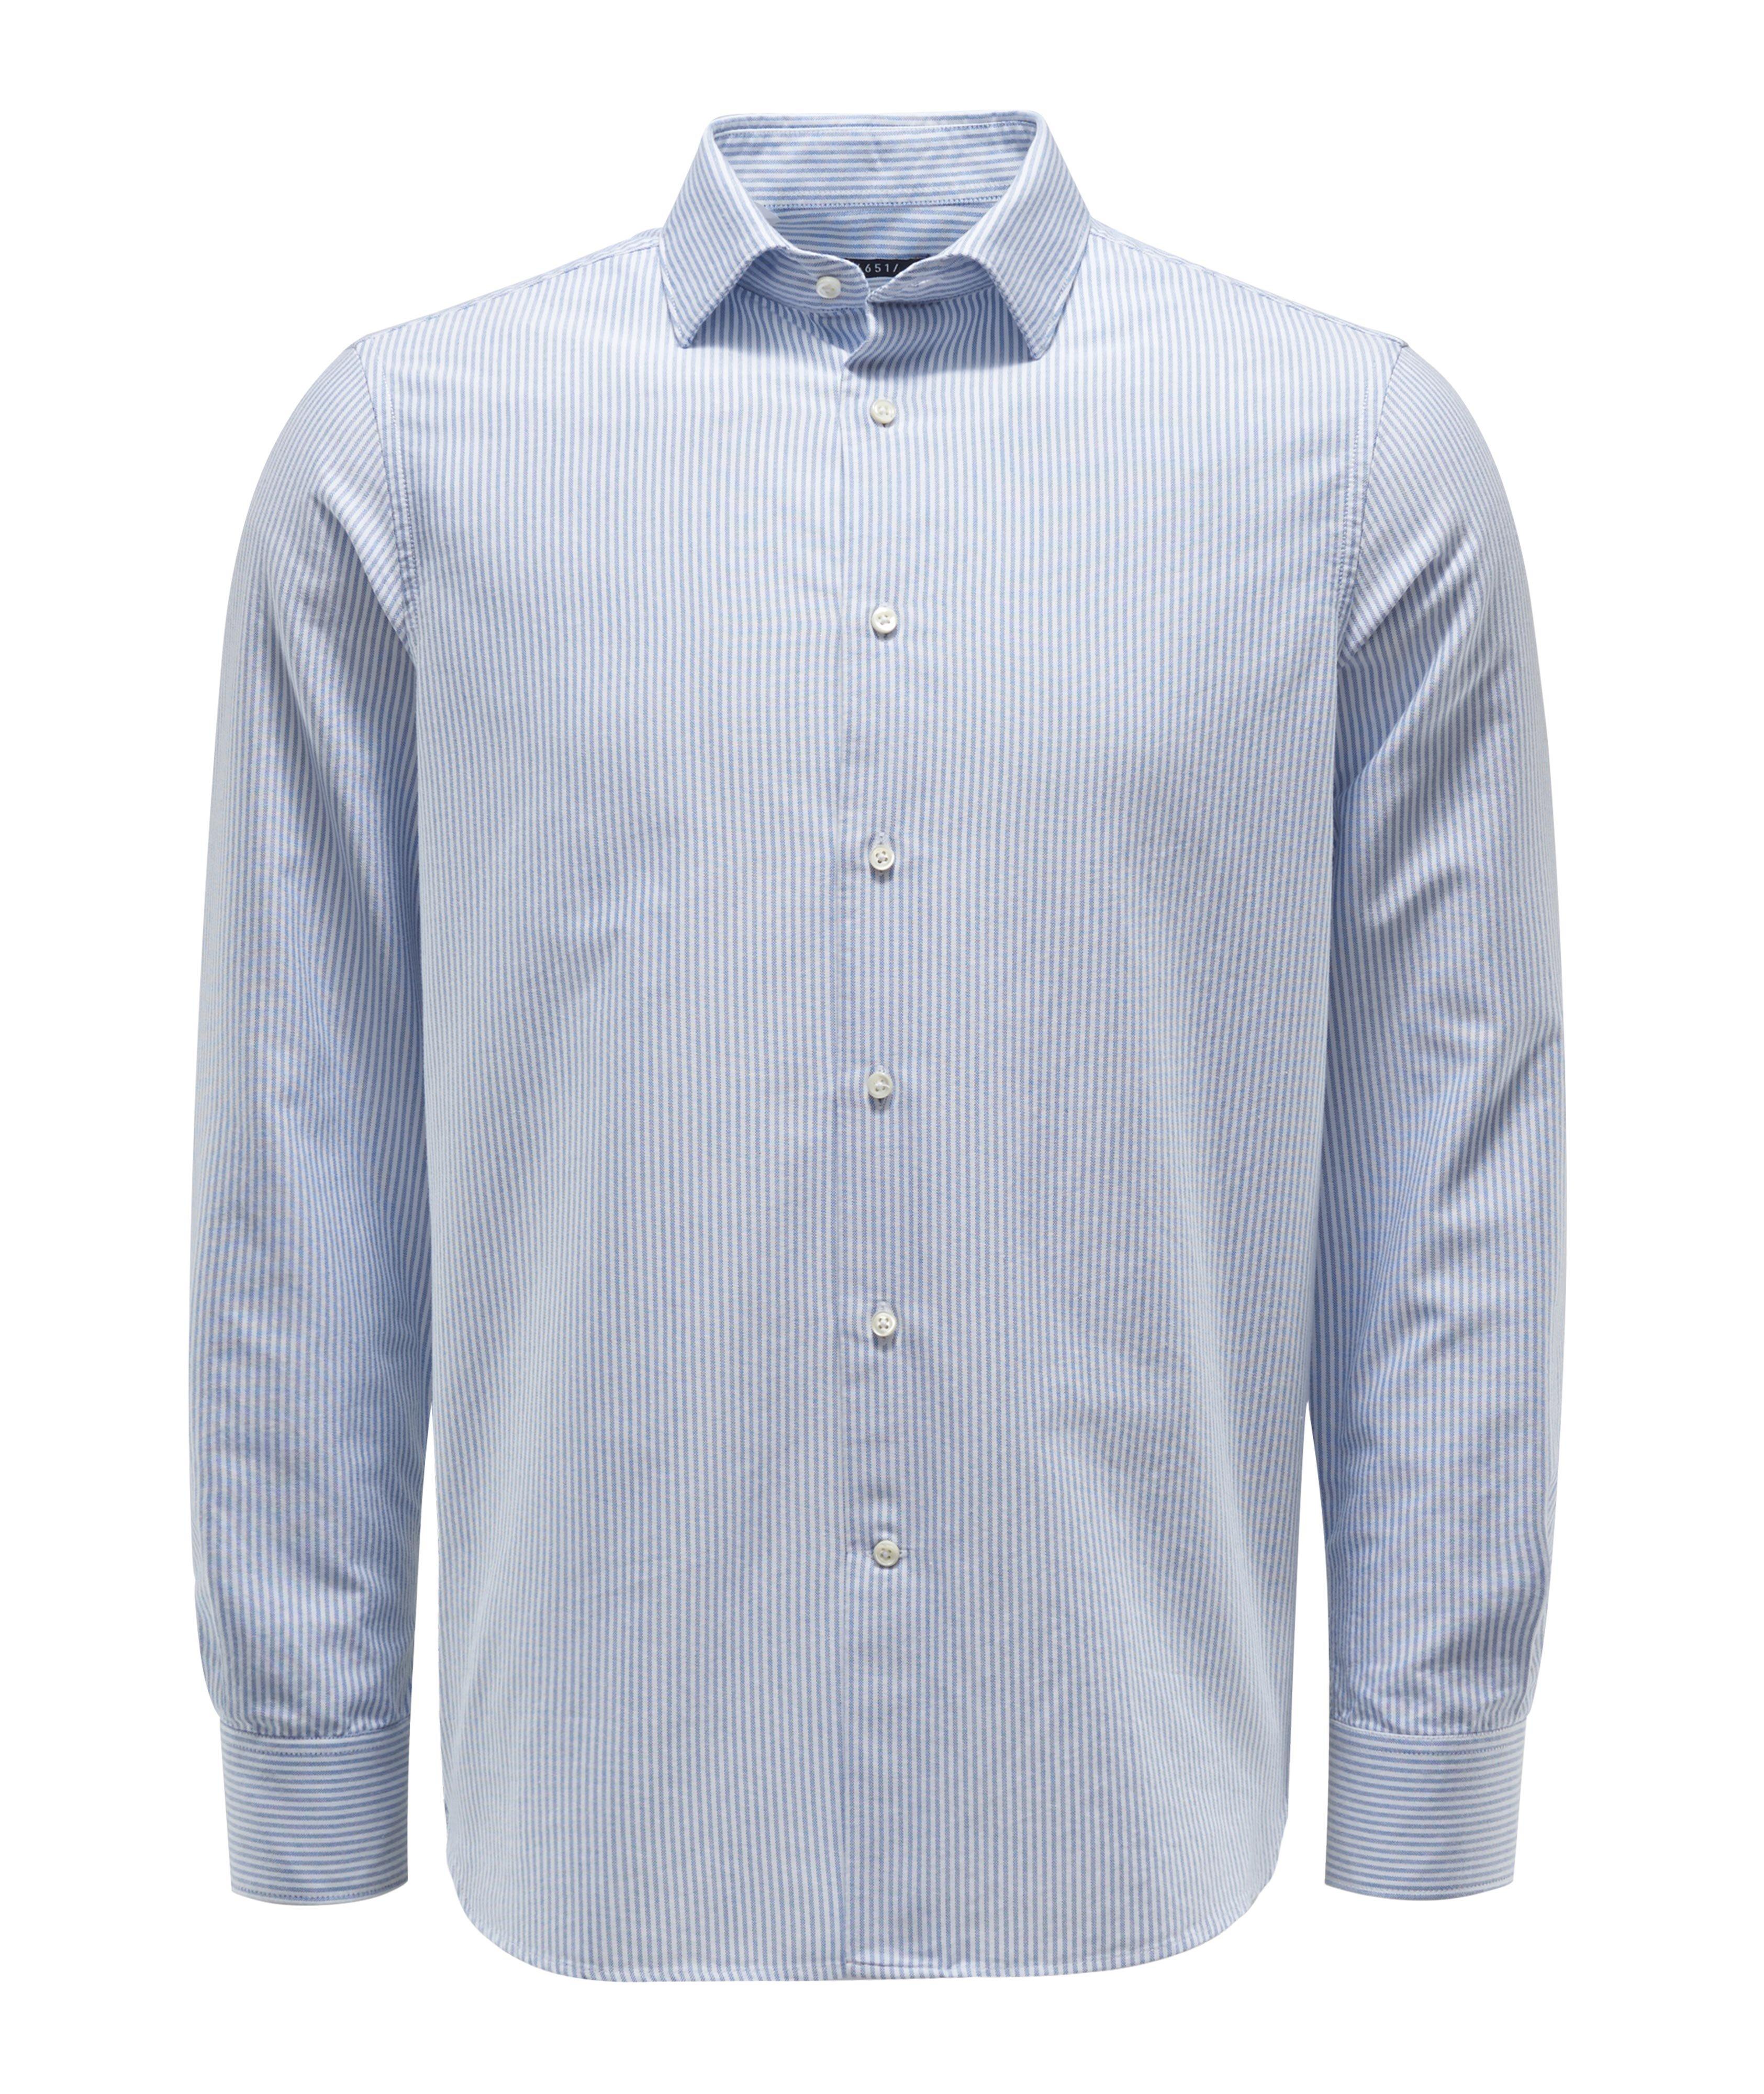 Striped Oxford Cotton Shirt image 0